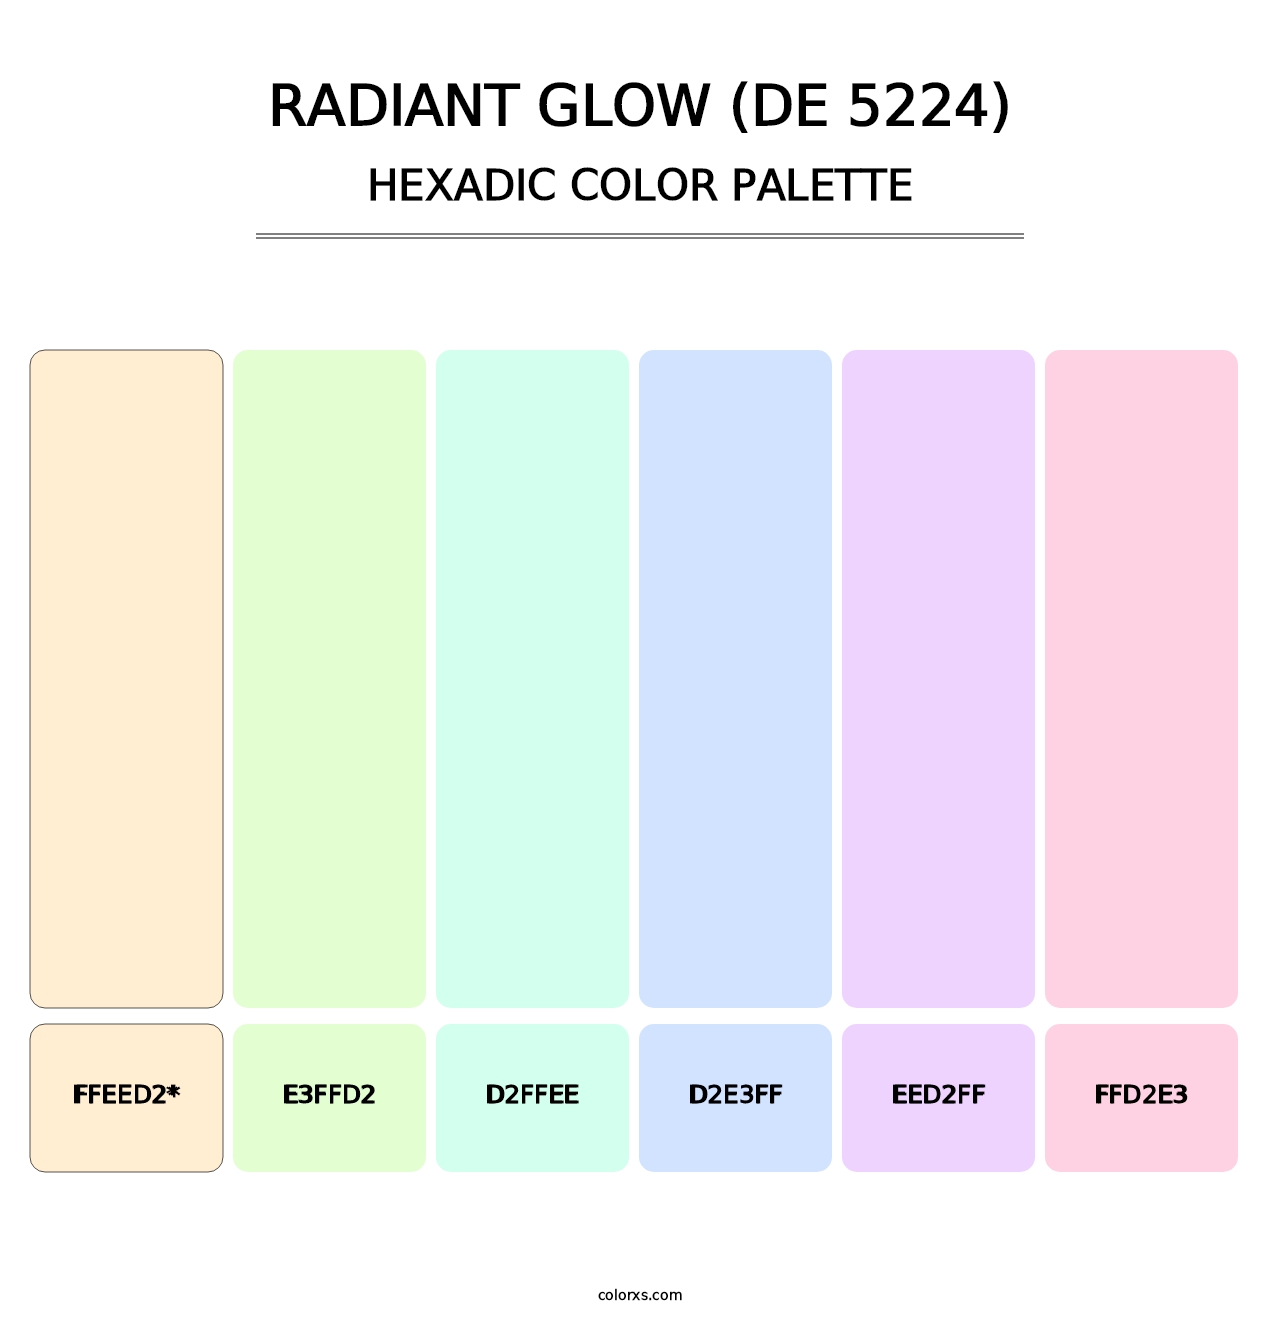 Radiant Glow (DE 5224) - Hexadic Color Palette